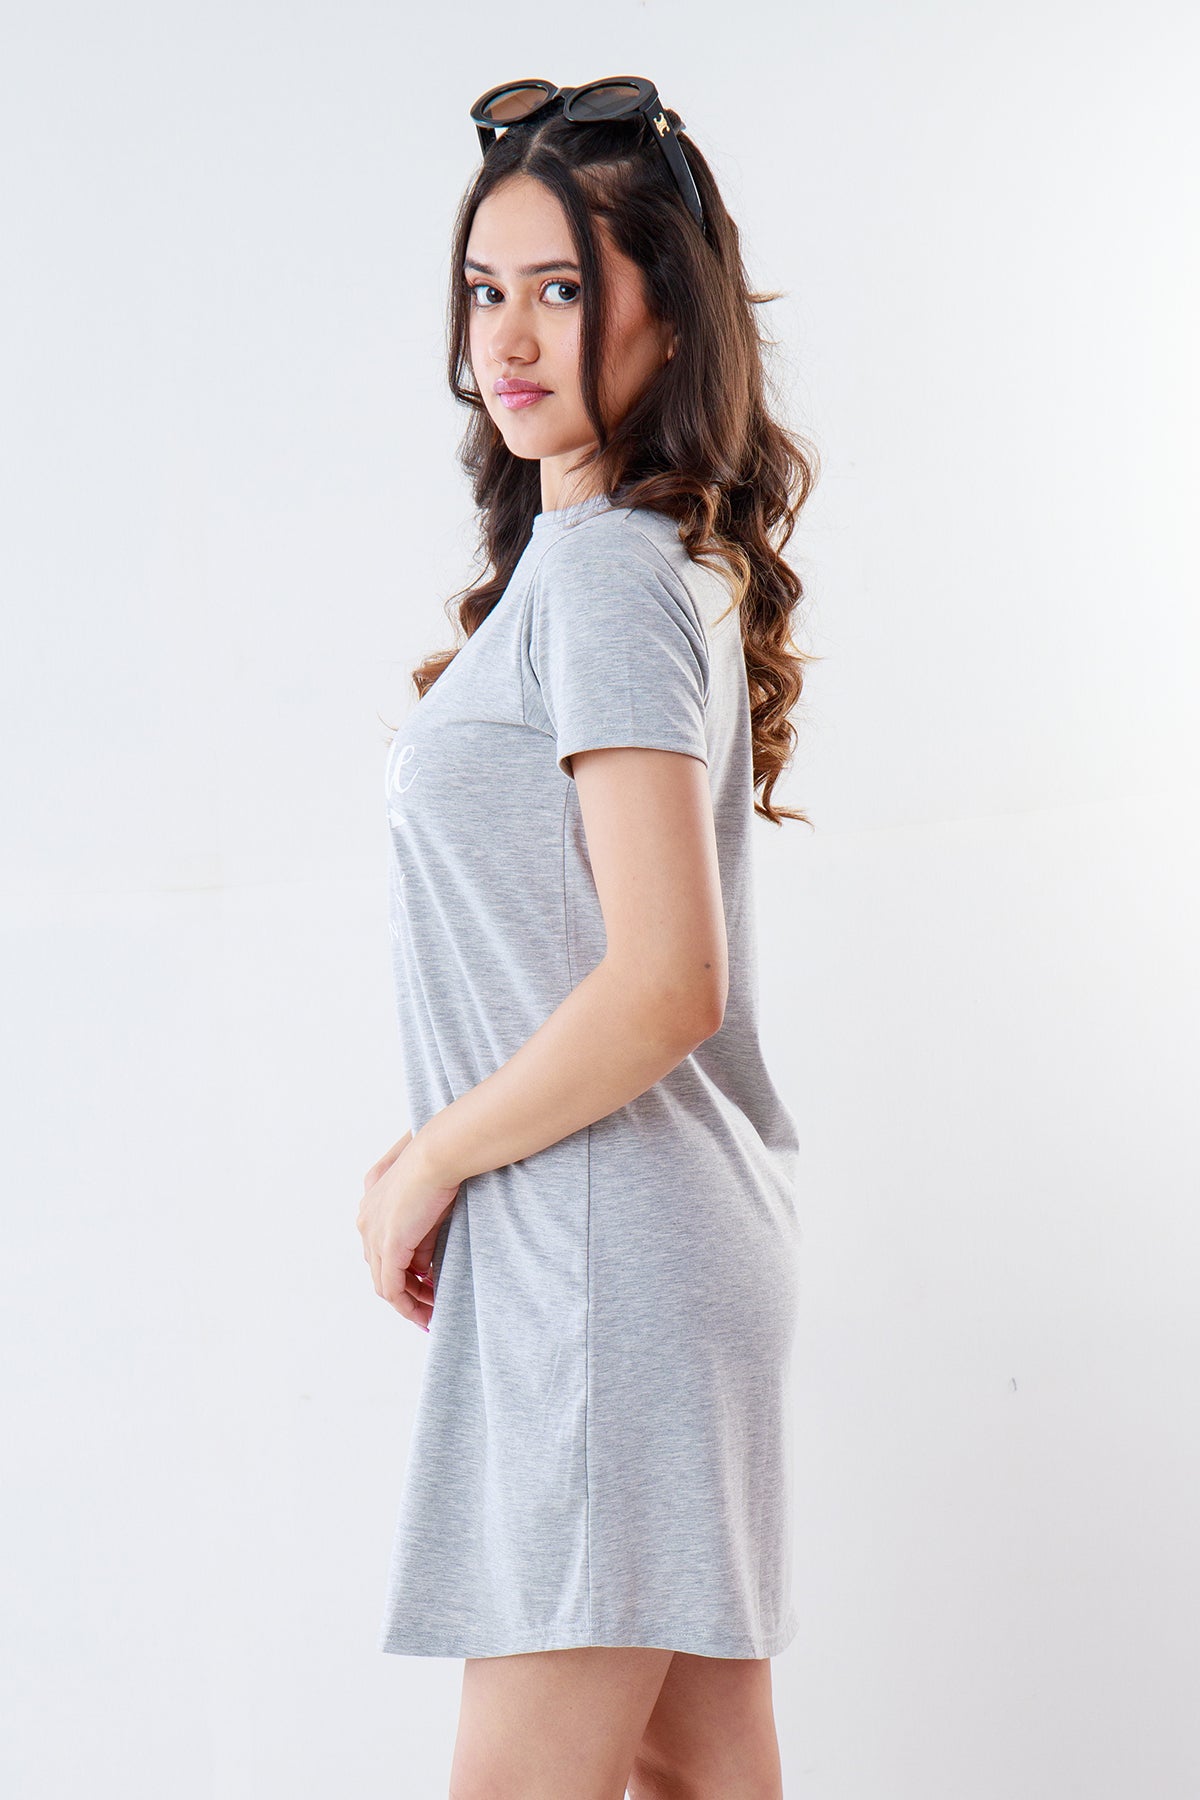 Modano Women's Short Sleeve Casual Dress